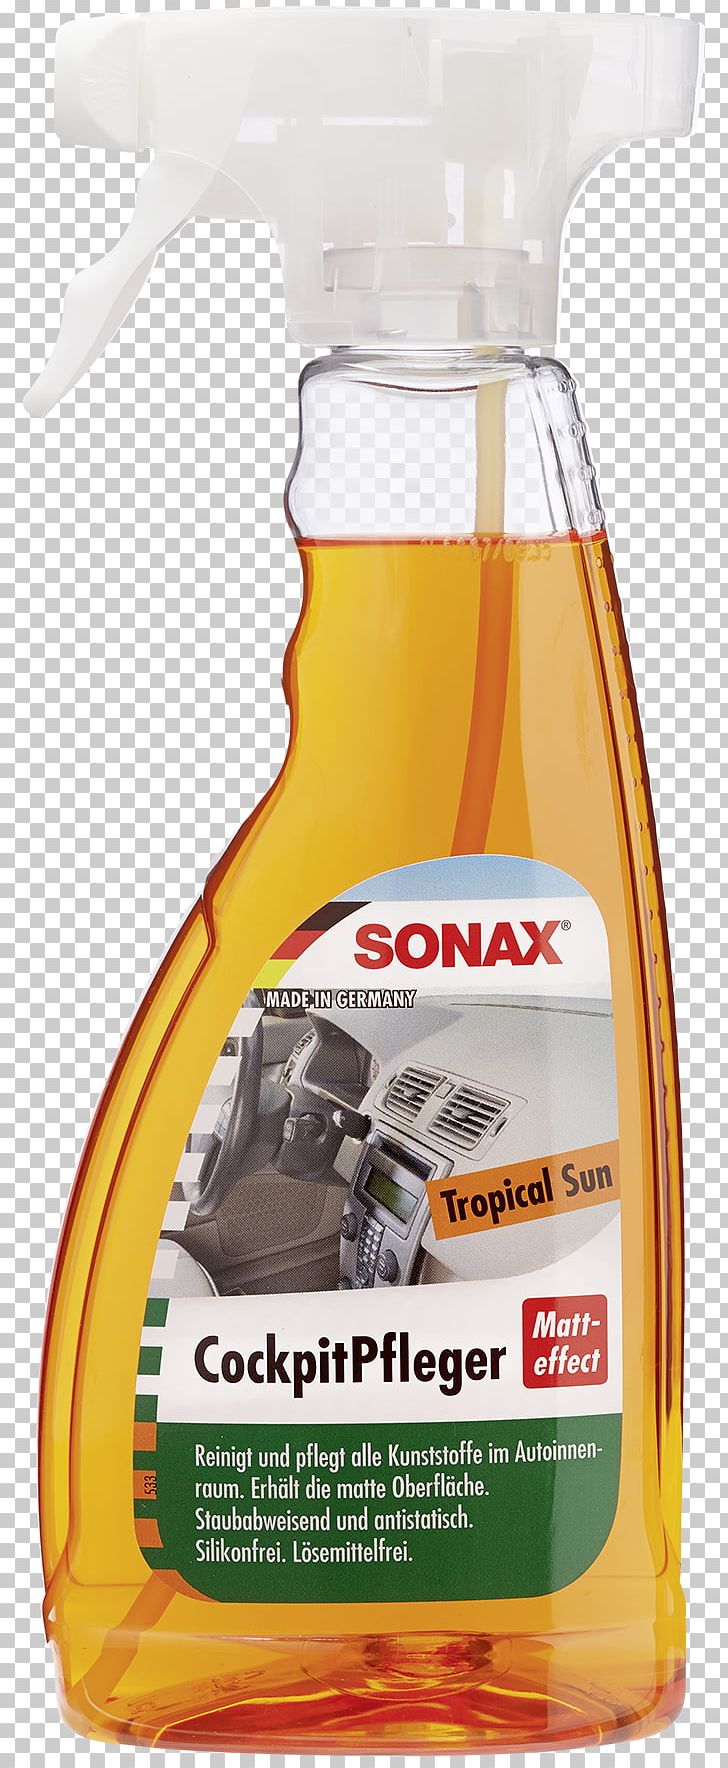 Sonax Car Milliliter Aerosol Spray Plastic PNG, Clipart, Aerosol Spray, Bottle, Car, Cleaning, Delticom Free PNG Download